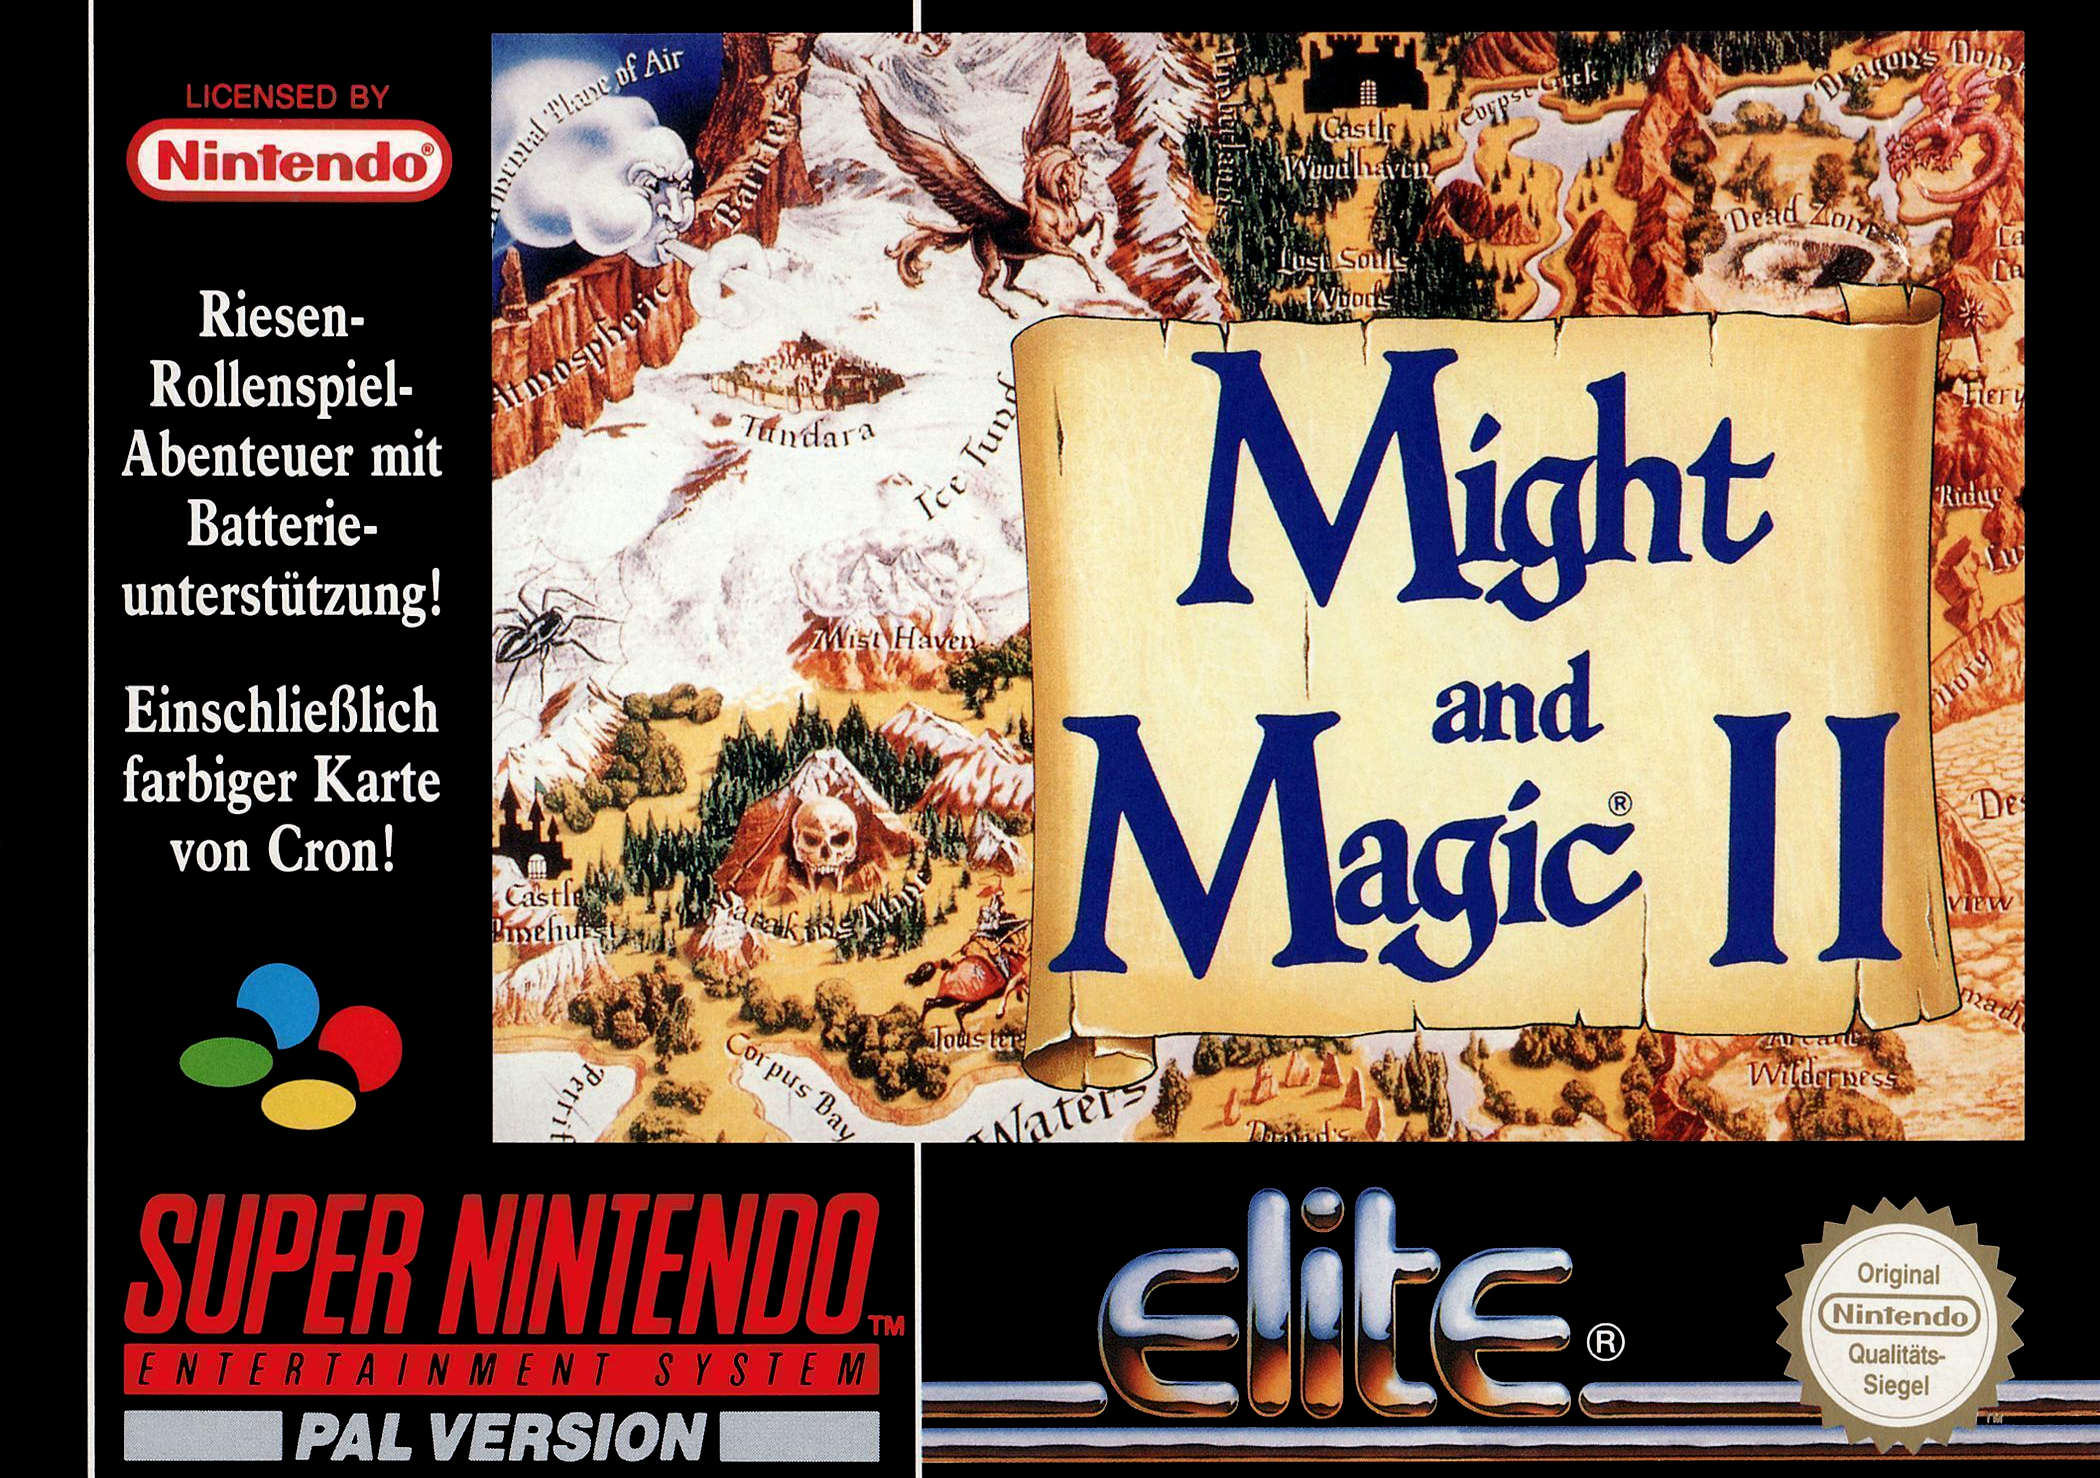 Game | Super Nintendo SNES | Might And Magic II